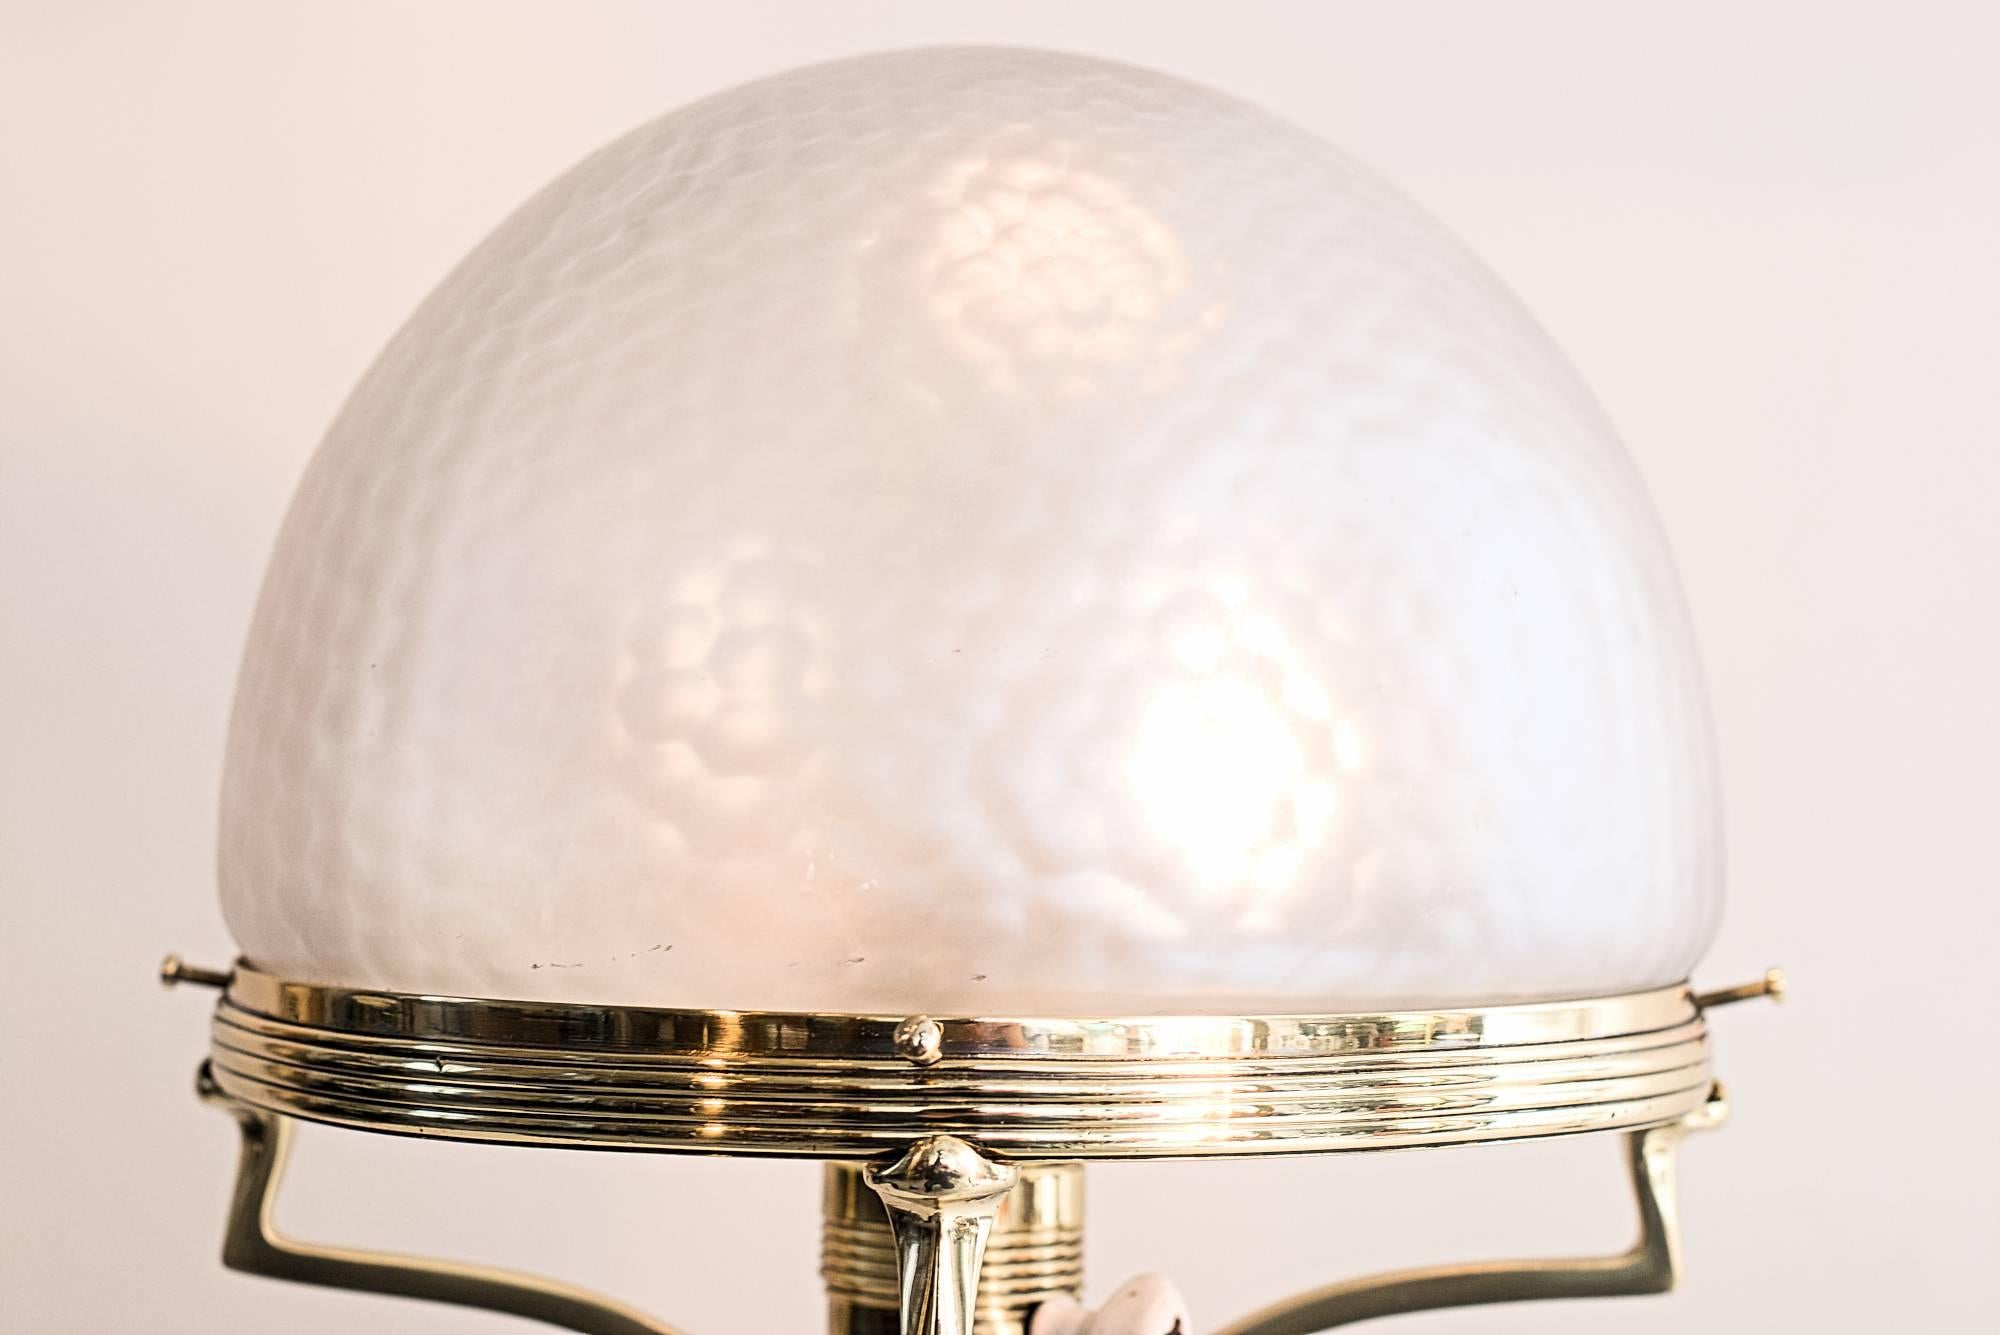 Beautiful jugendstil table lamp with original glass
polished and stove enamelled.